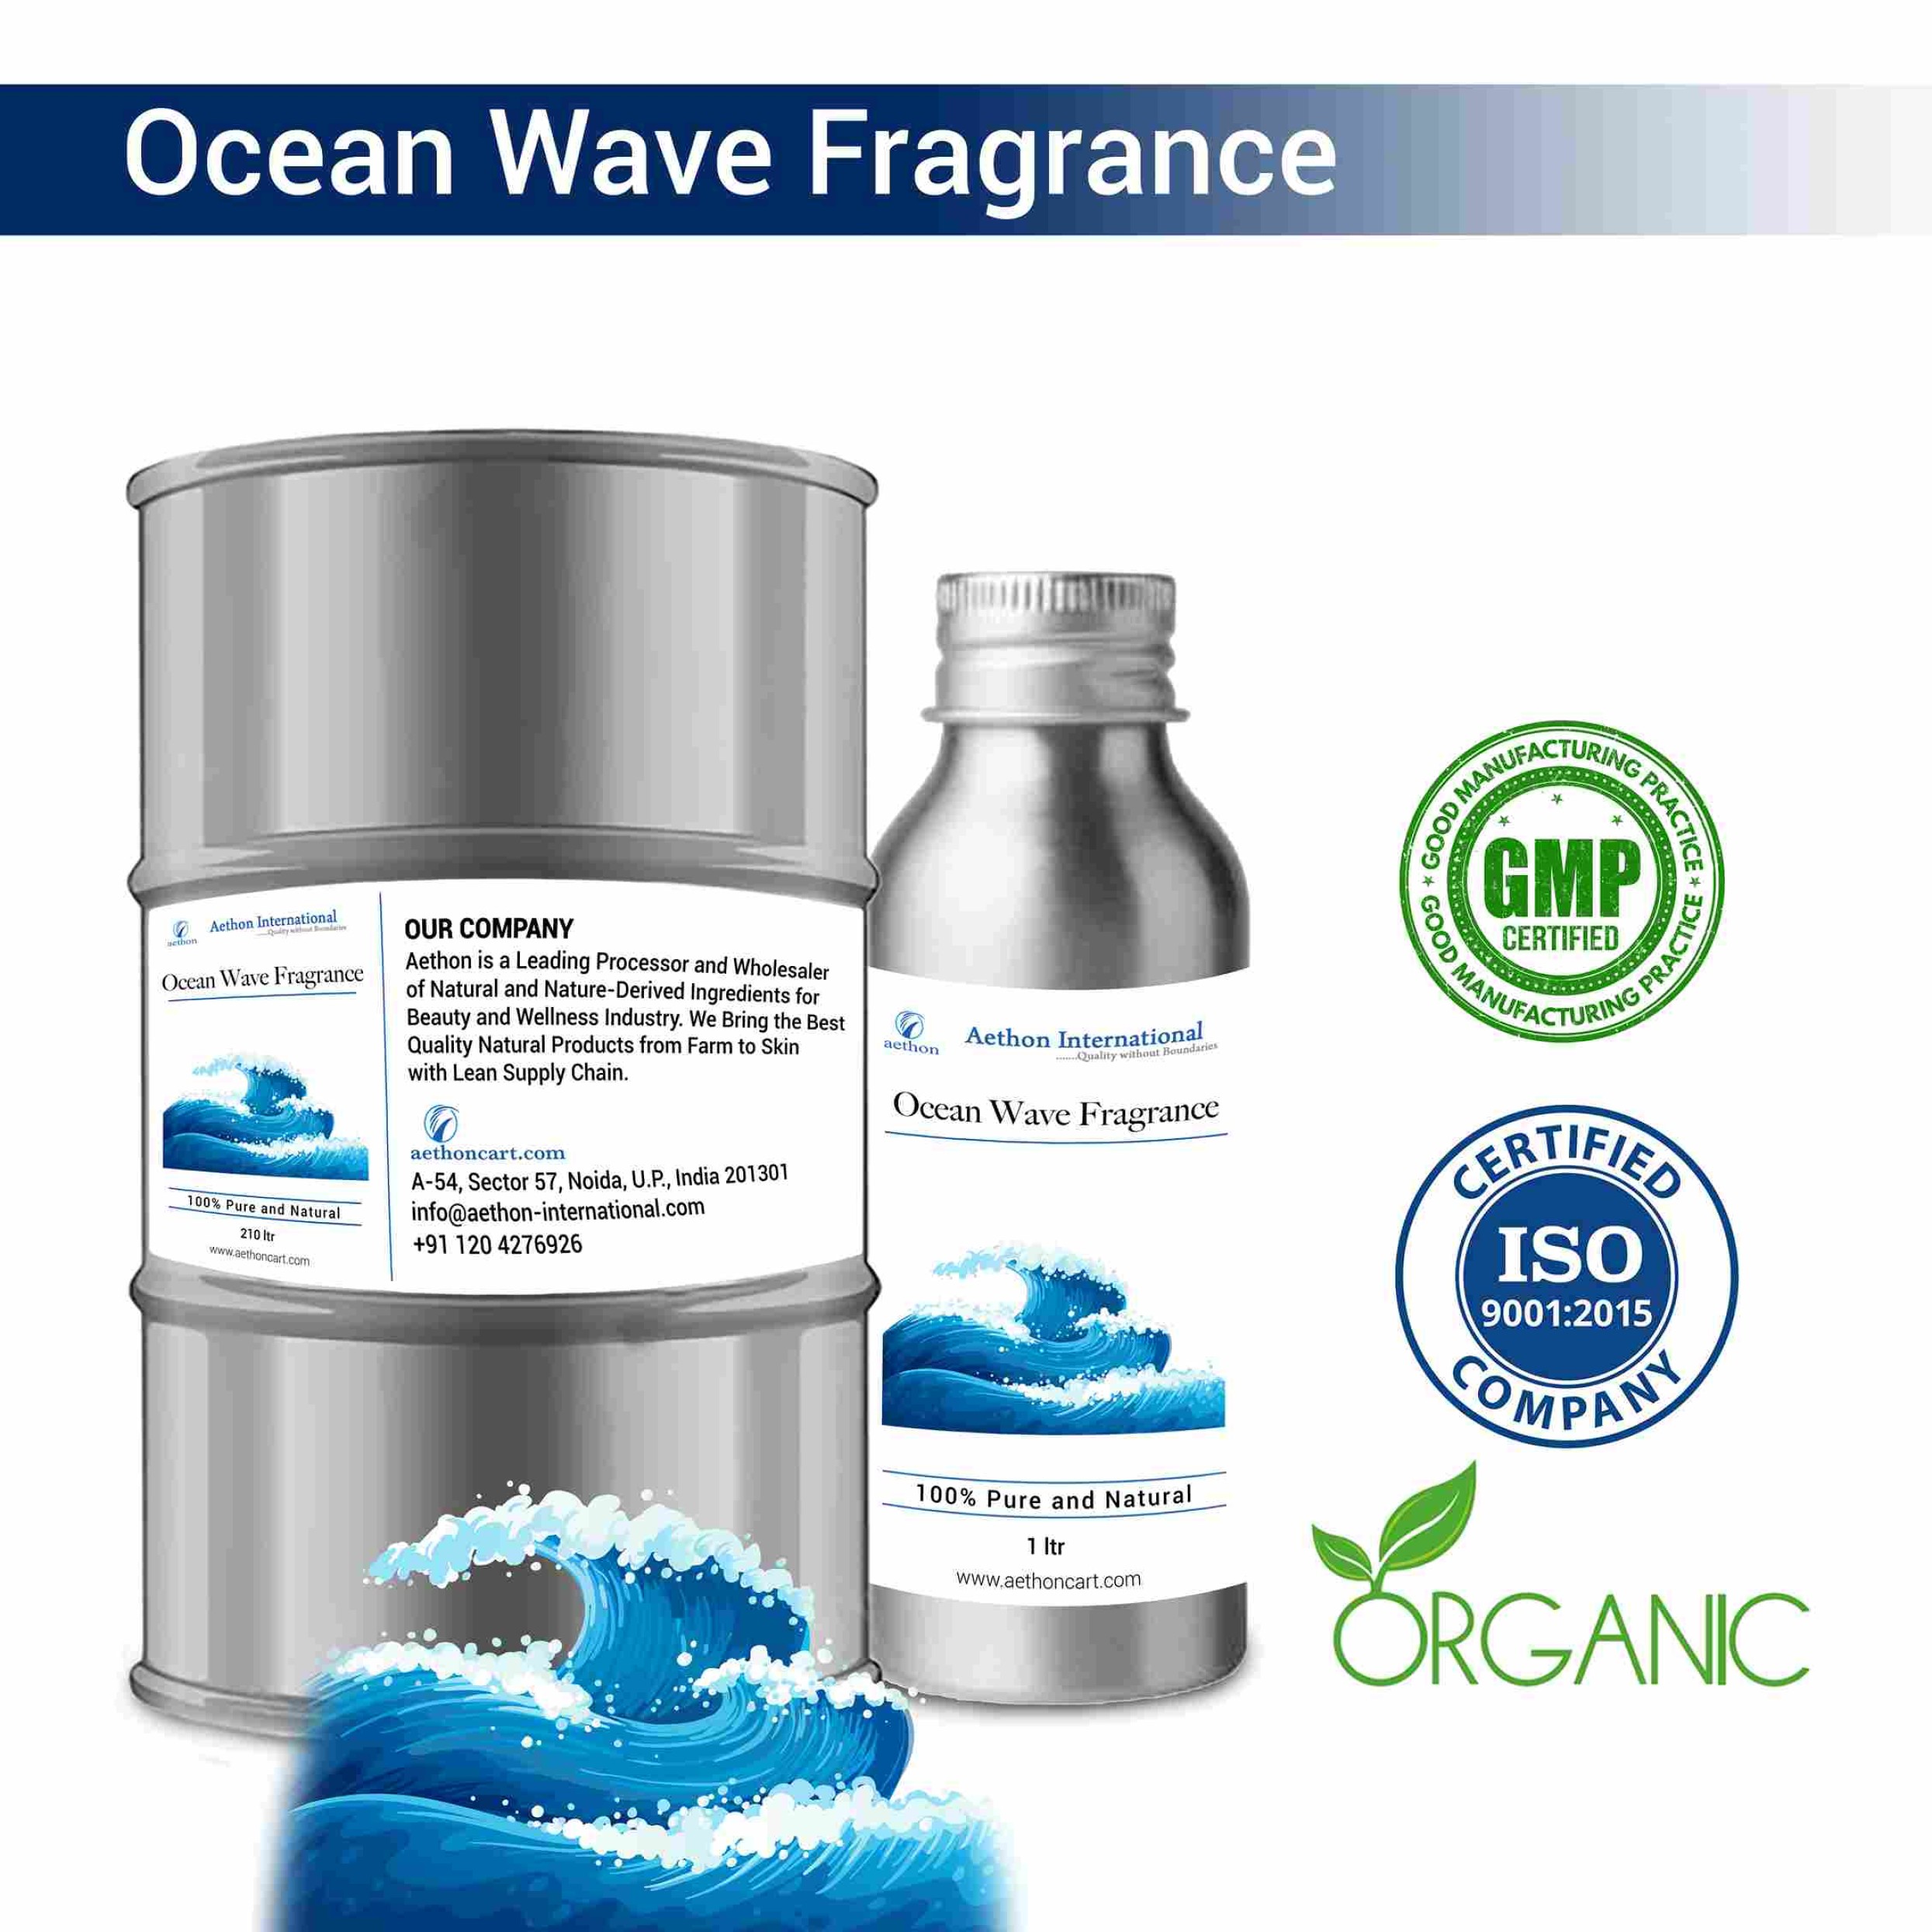 Ocean Wave Fragrance